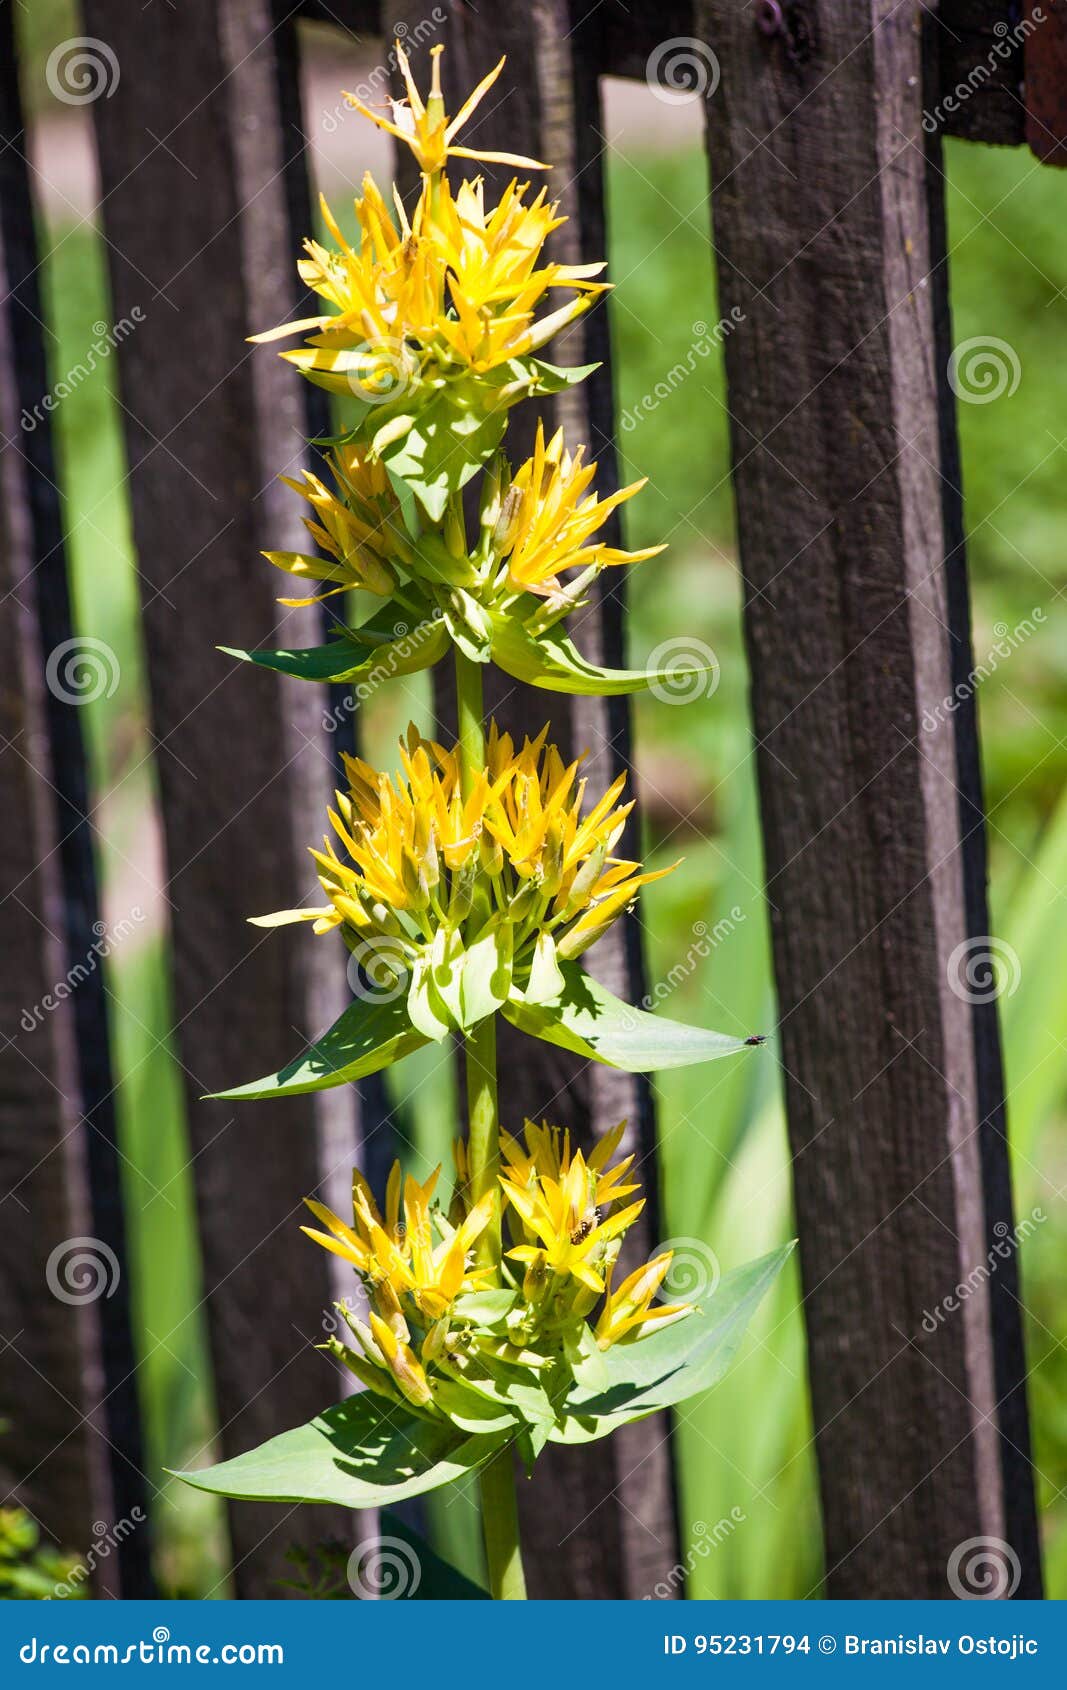 great yellow gentian flower natural medicine